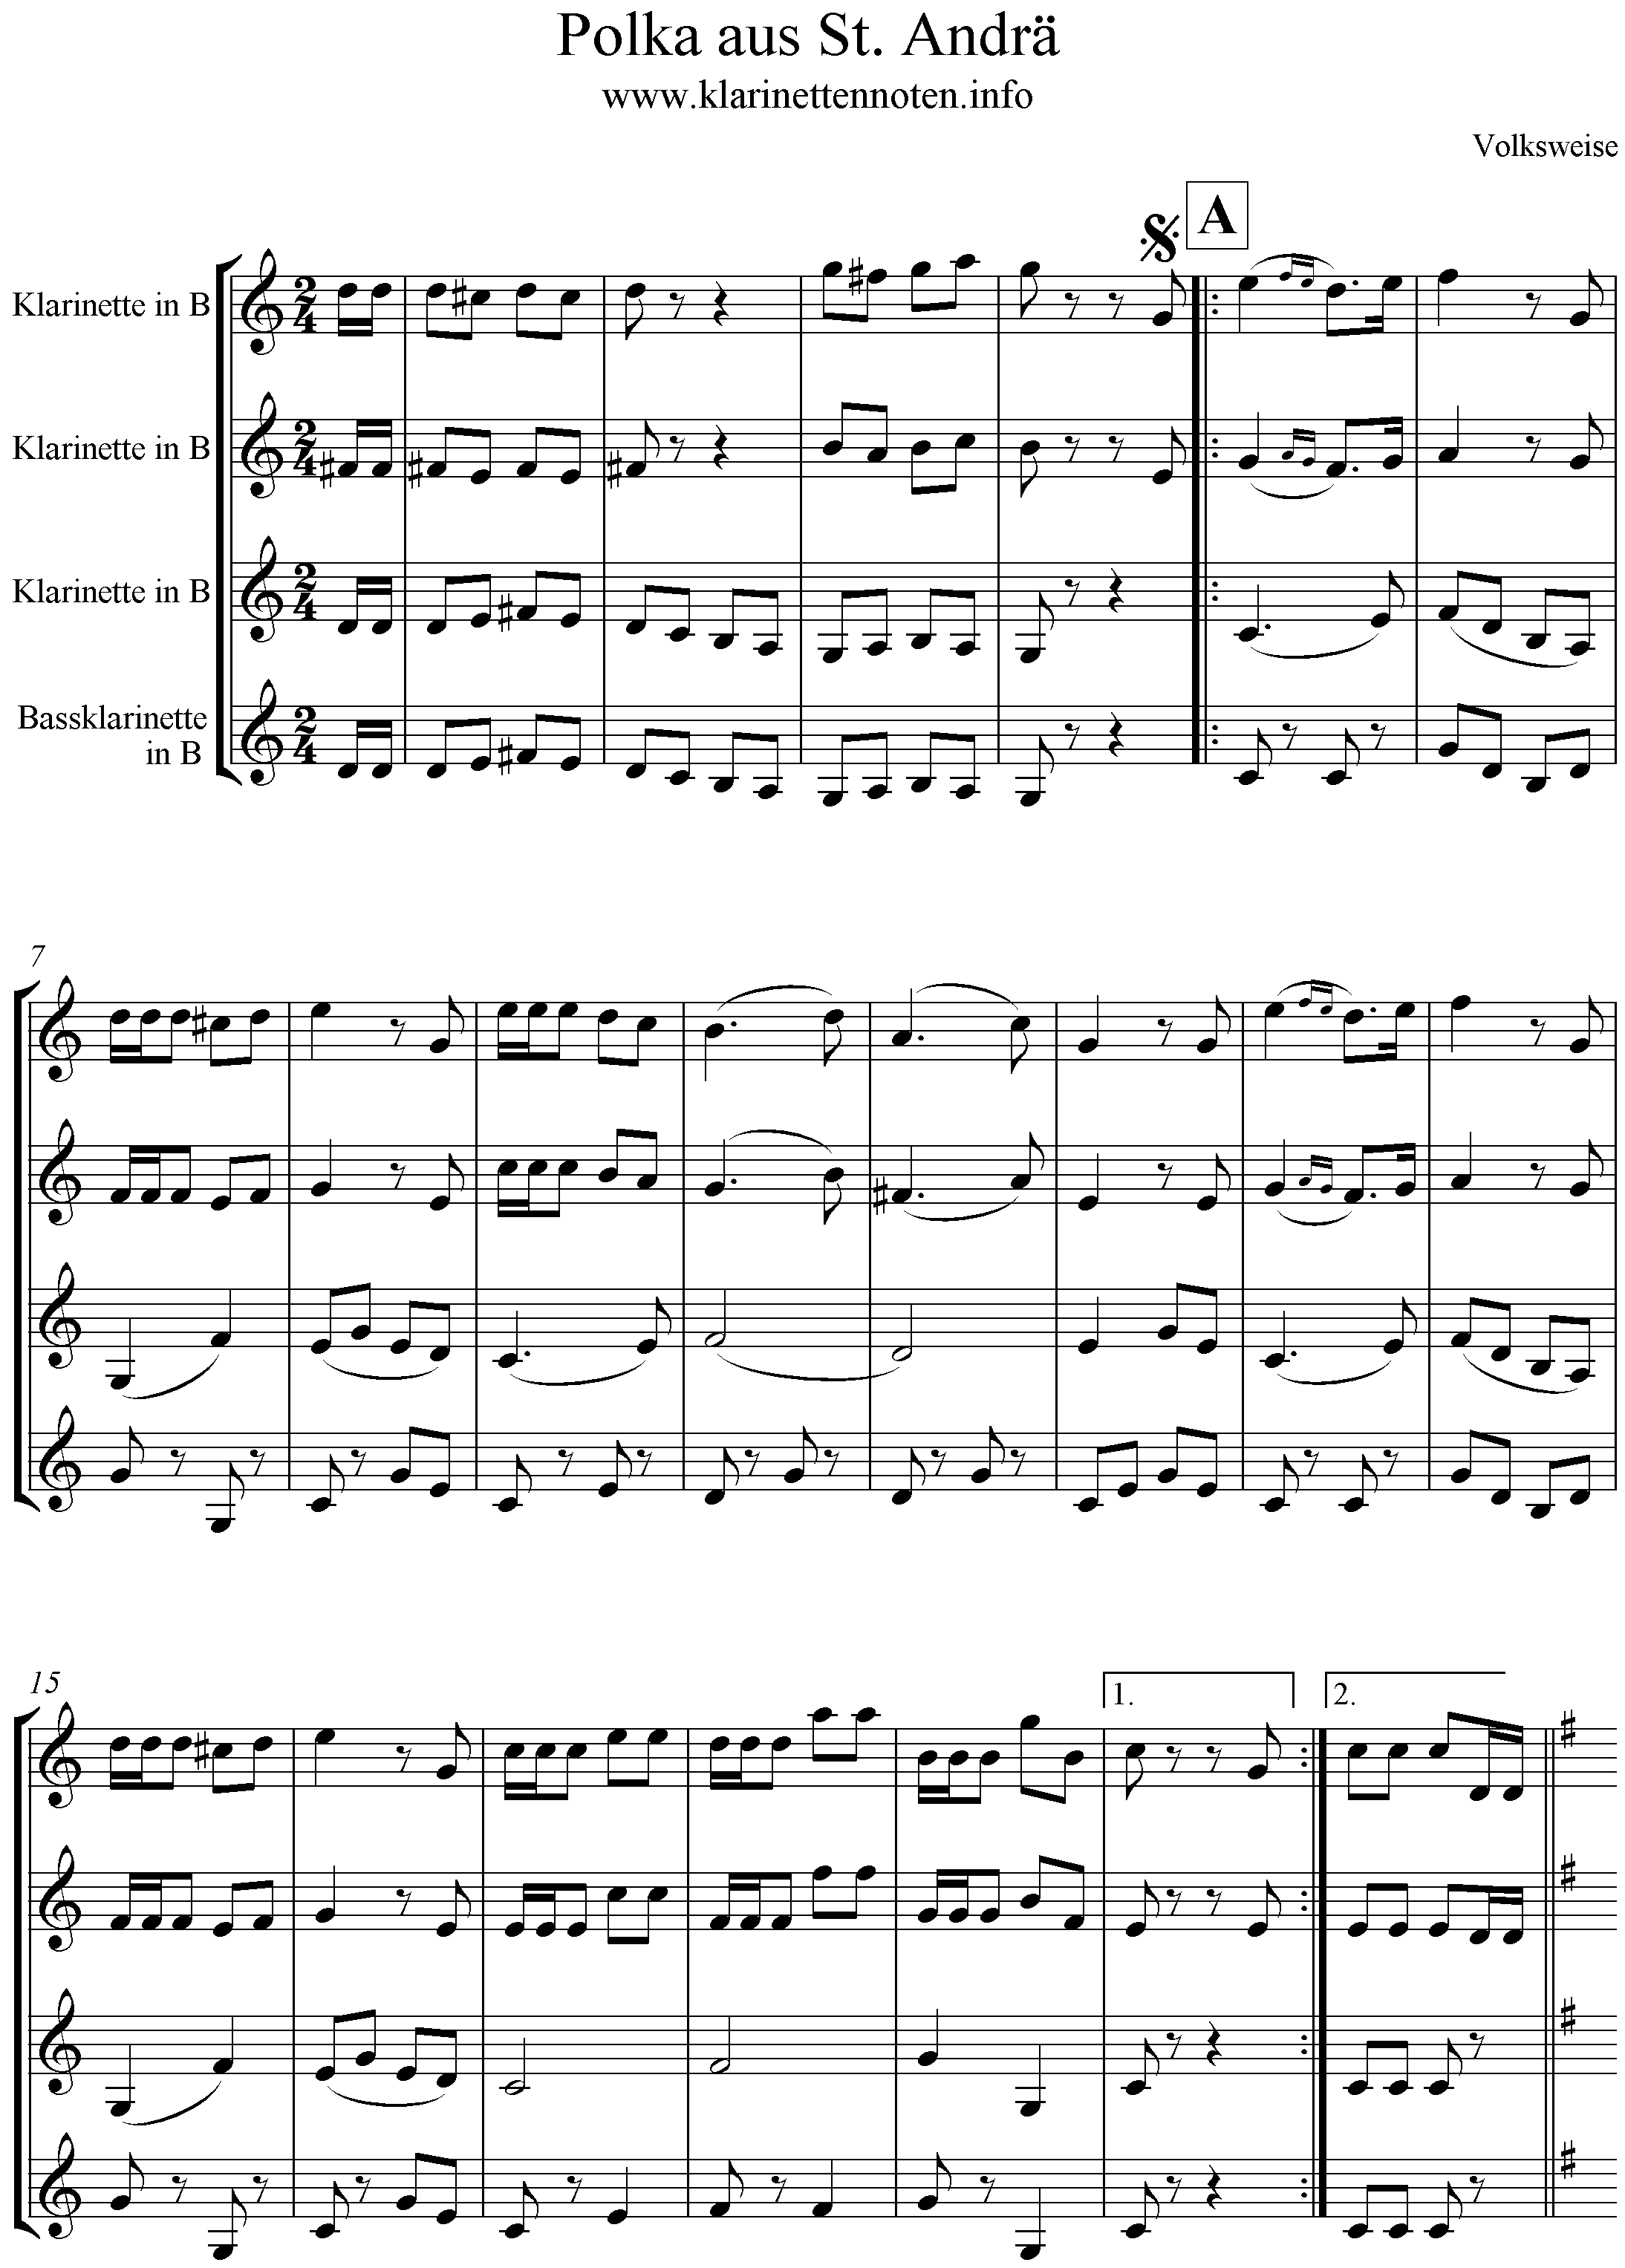 Polka aus St. Andrä, Quartett